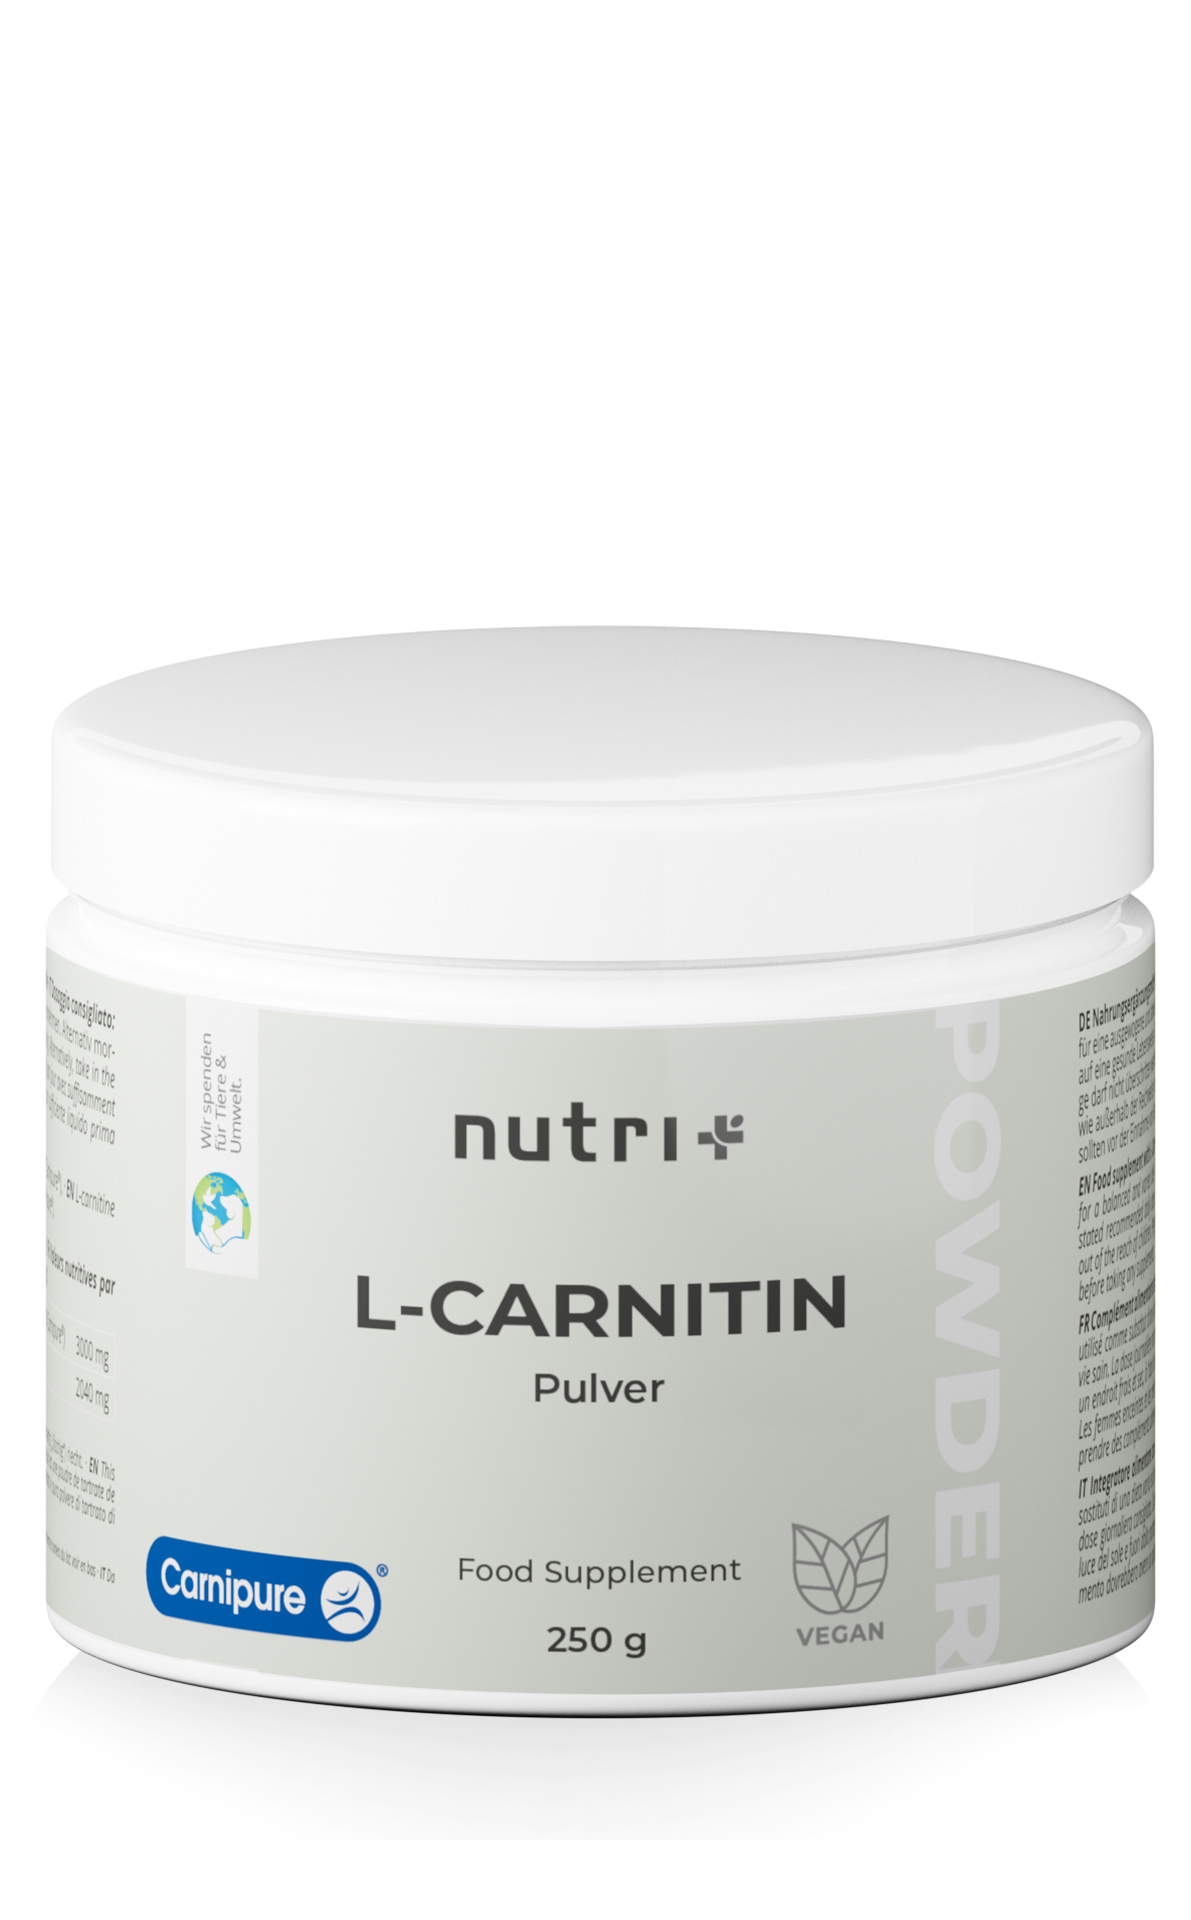 Nutri+ L-Carnitin Pulver (Carnipure®) | 250g | Optimiert Energie & Metabolismus | Vegan | Made in Germany